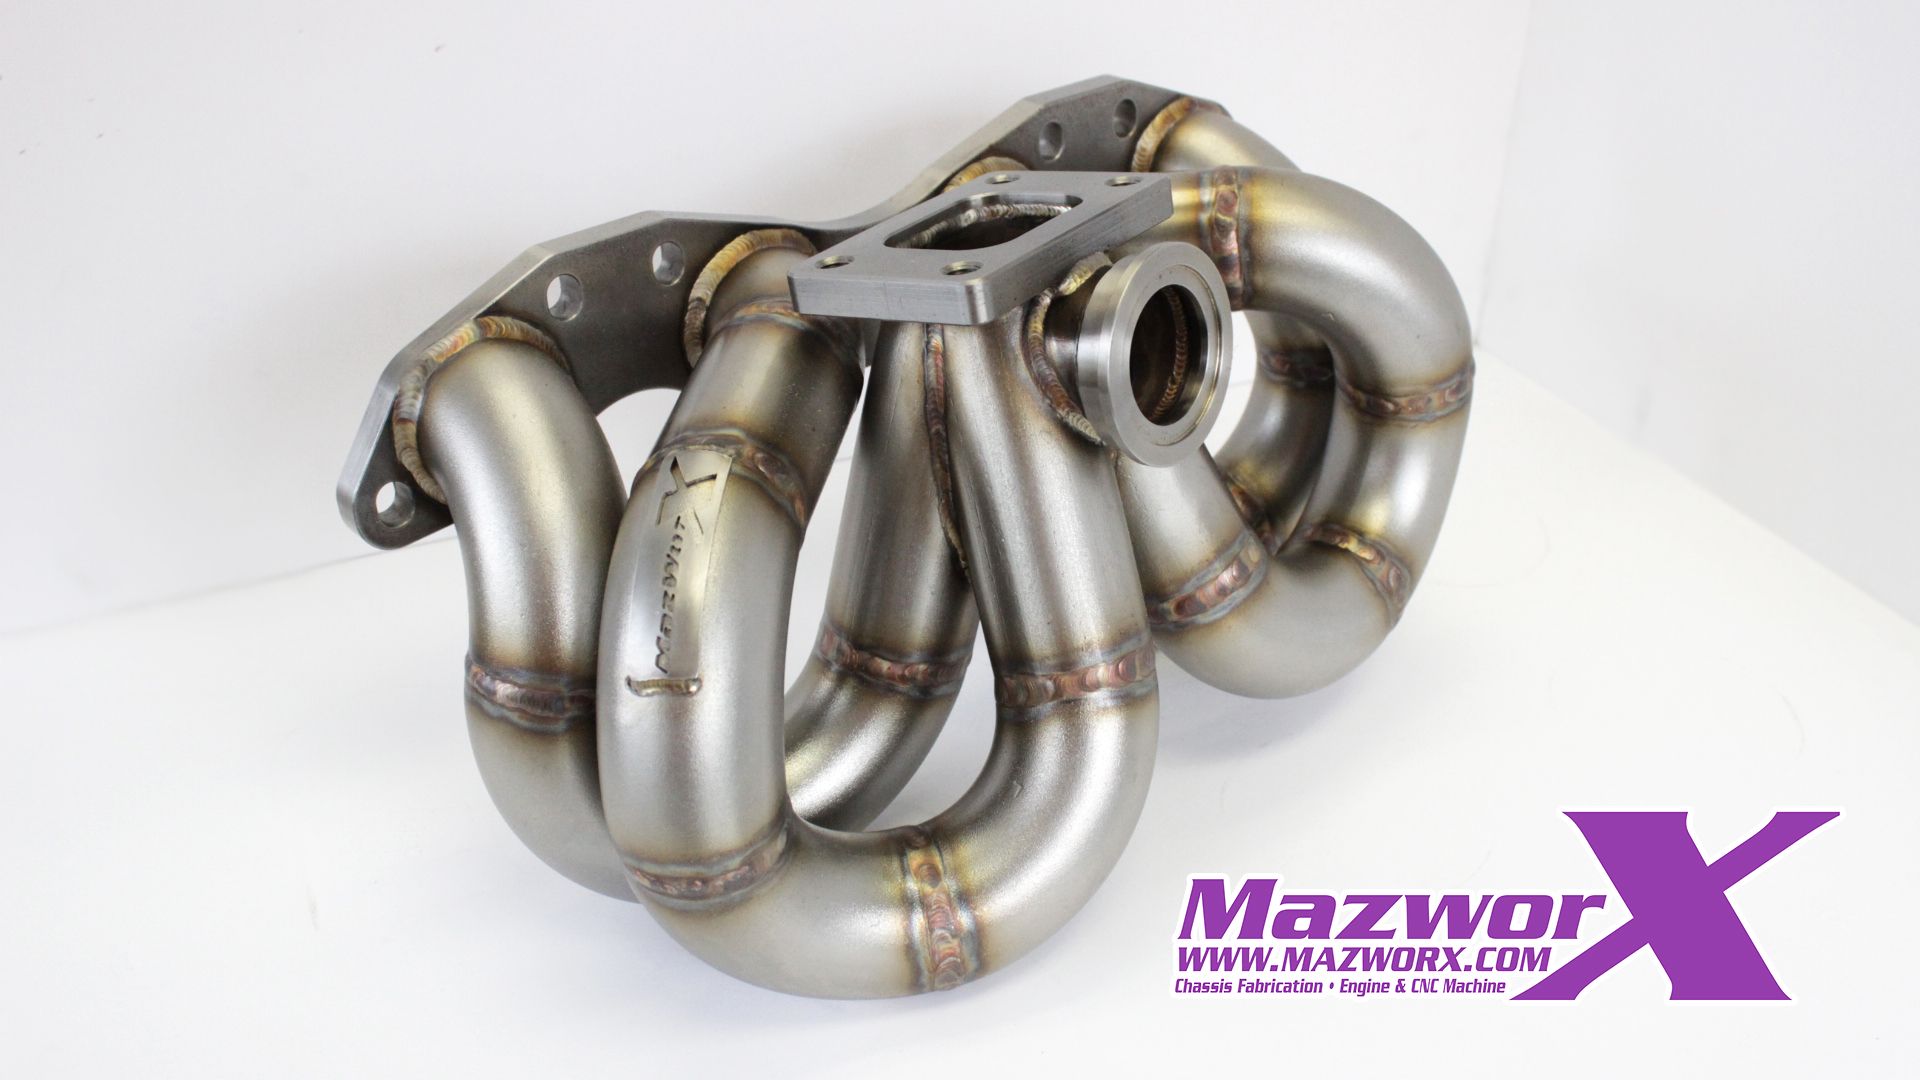 Mazworx SS Series Top Mount Turbo Manifold - Nissan SR20